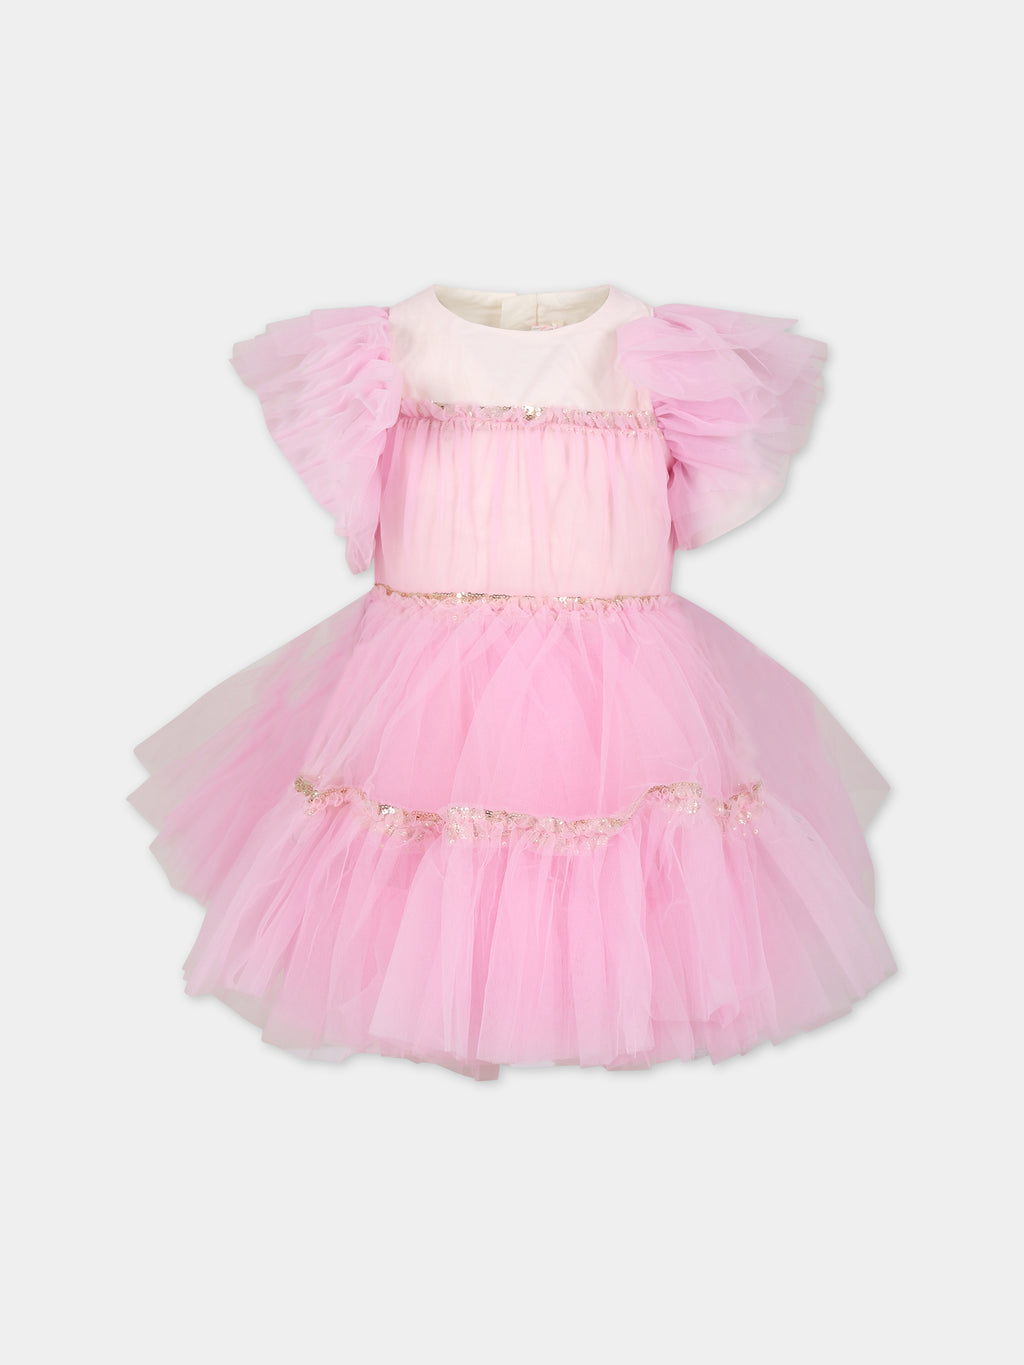 Pink tulle dress for girl